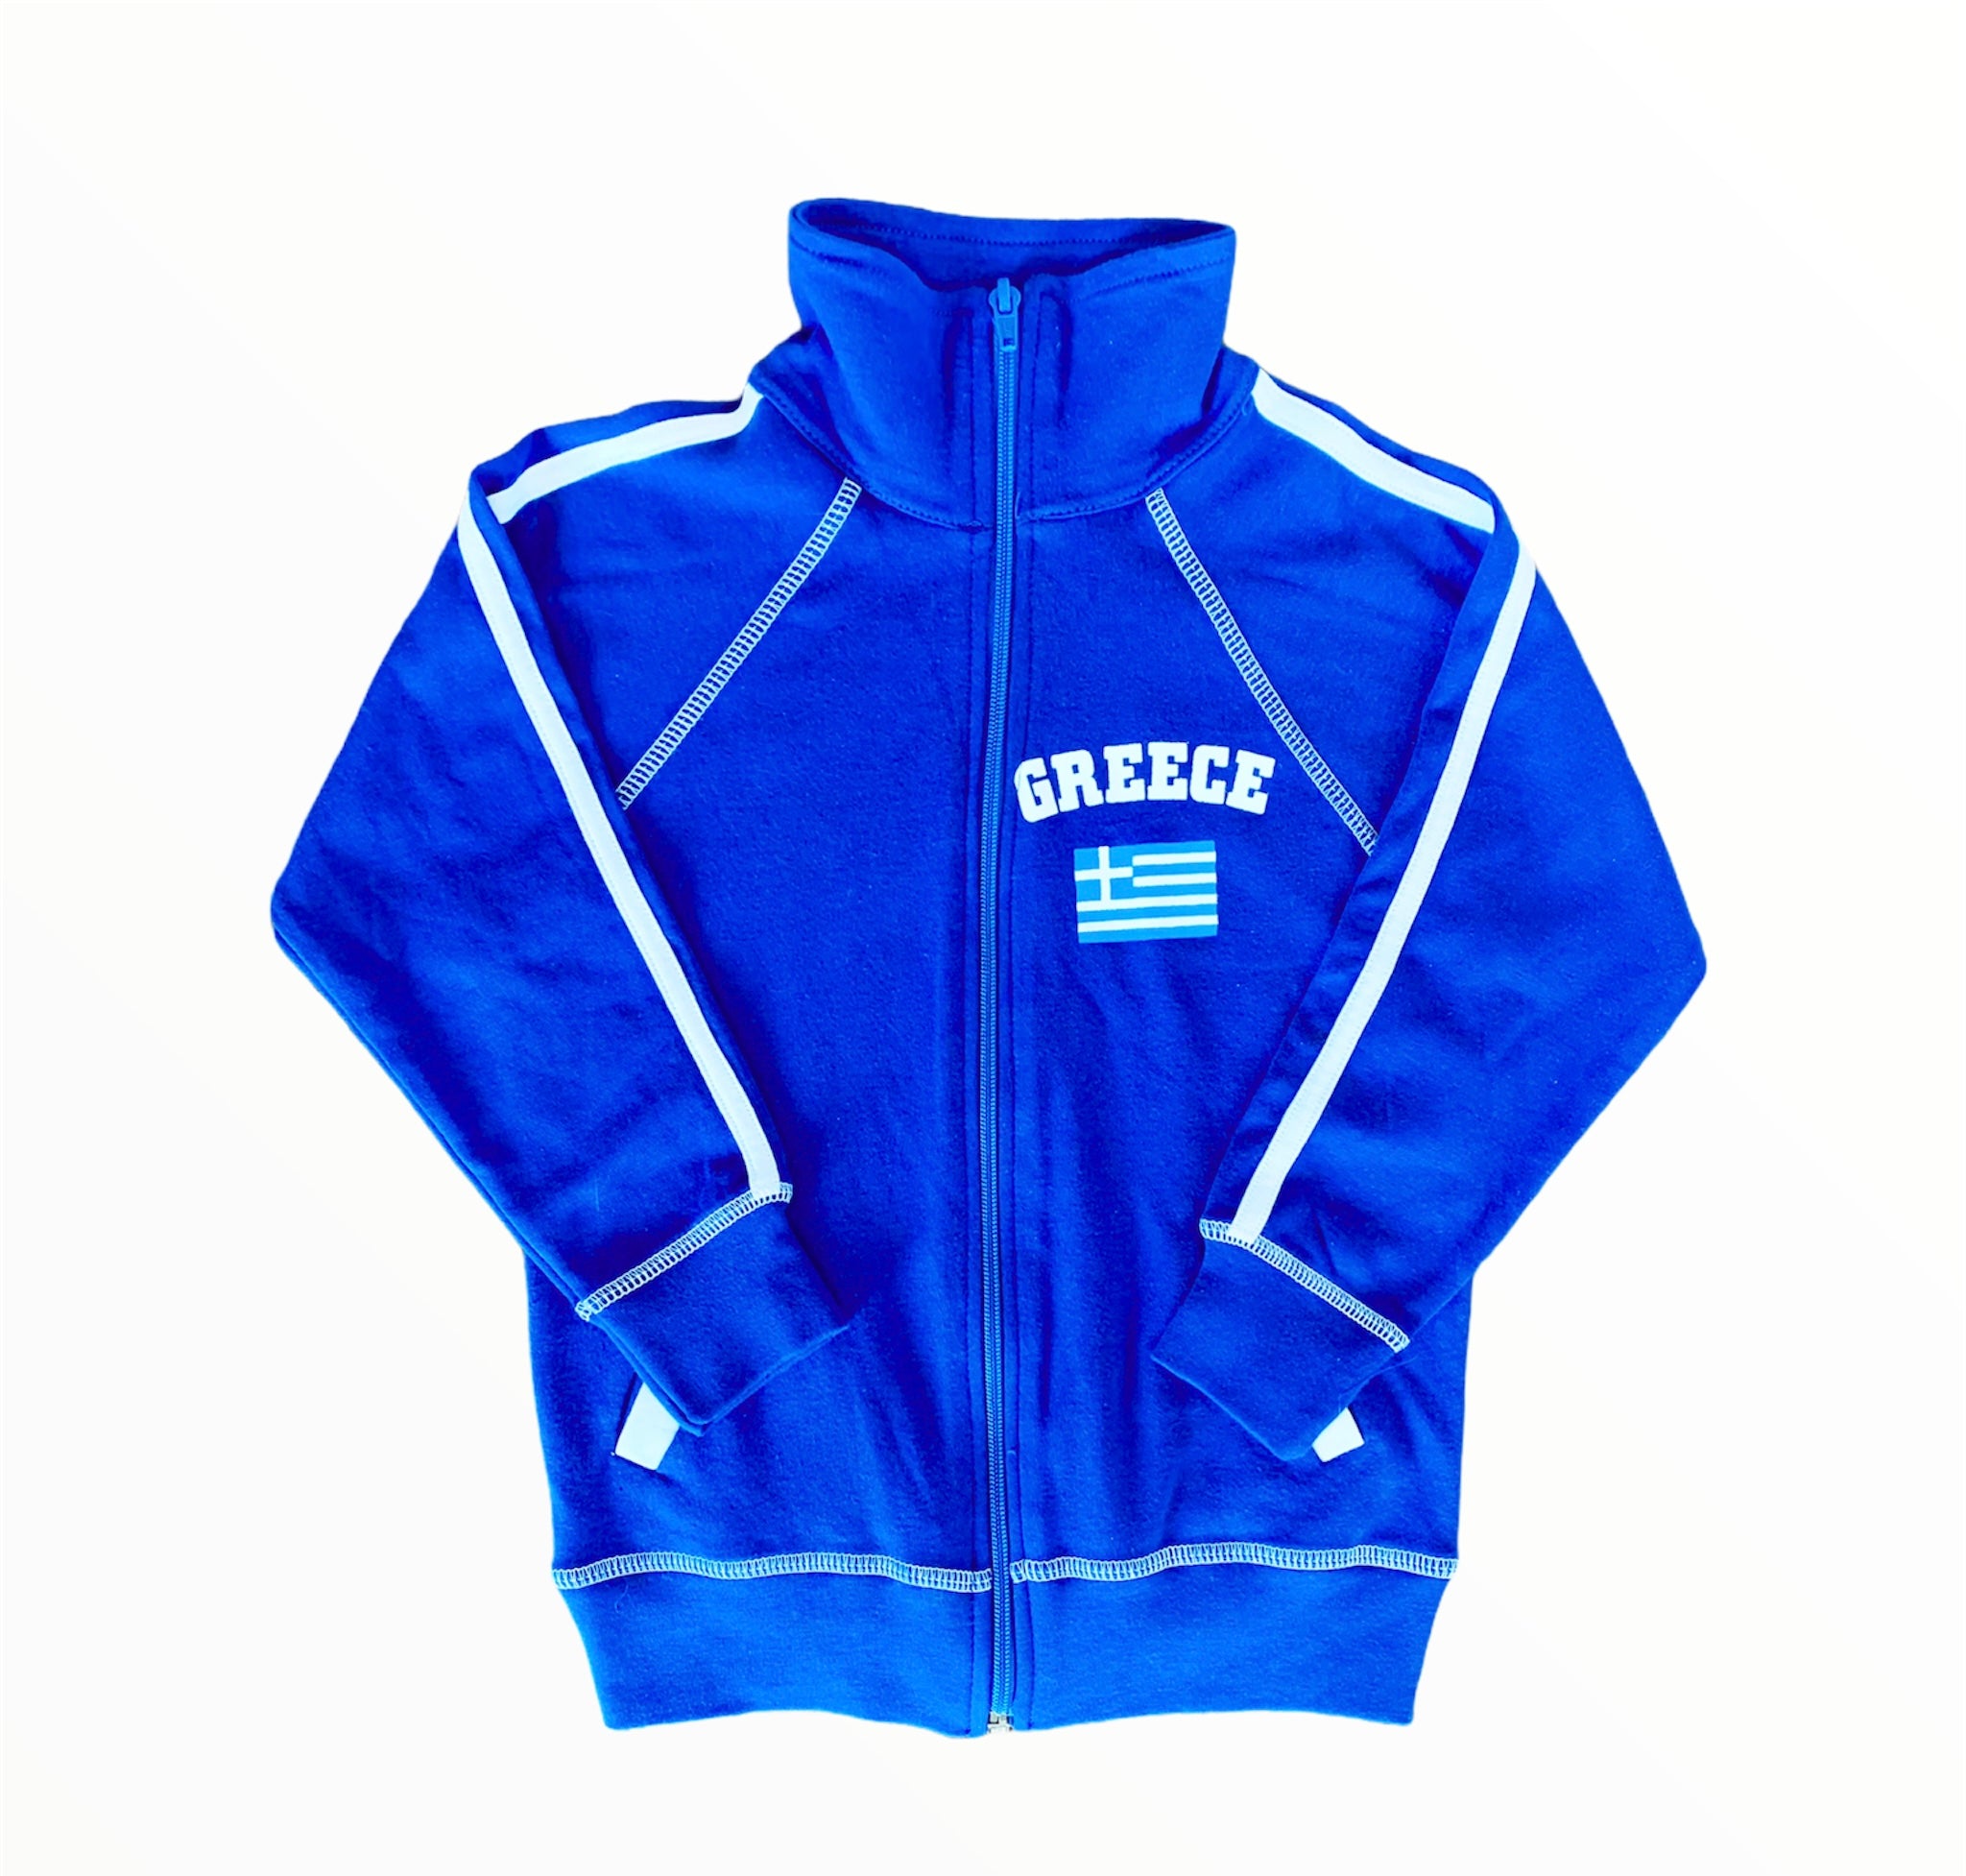 Greece Spring Jacket